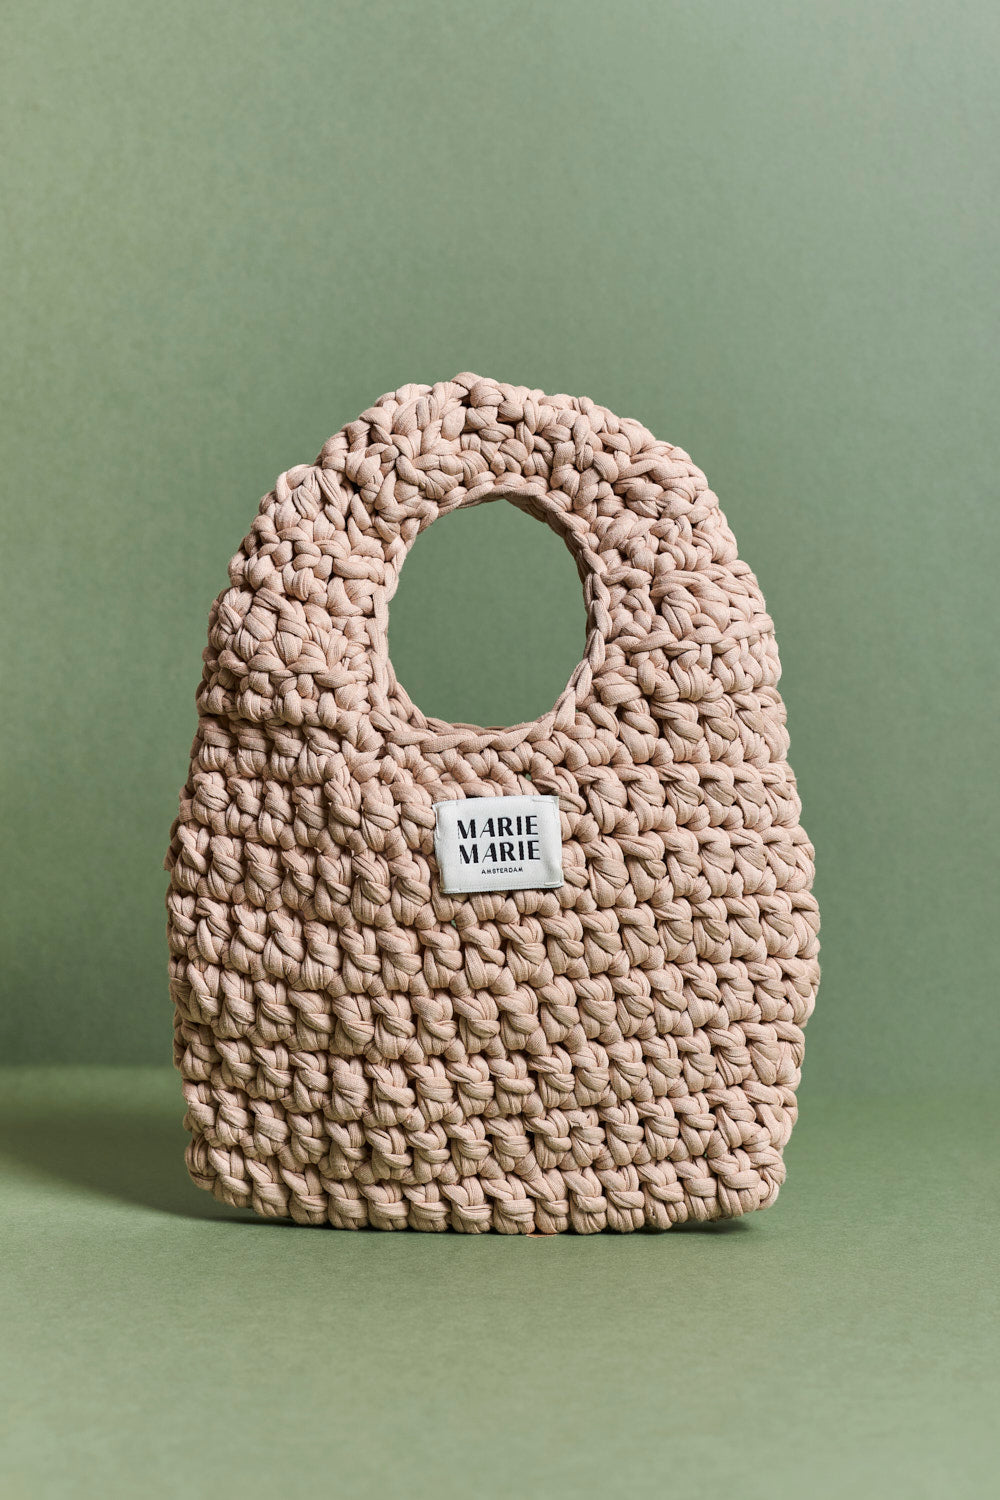 Chunky Bag by Marie Marie